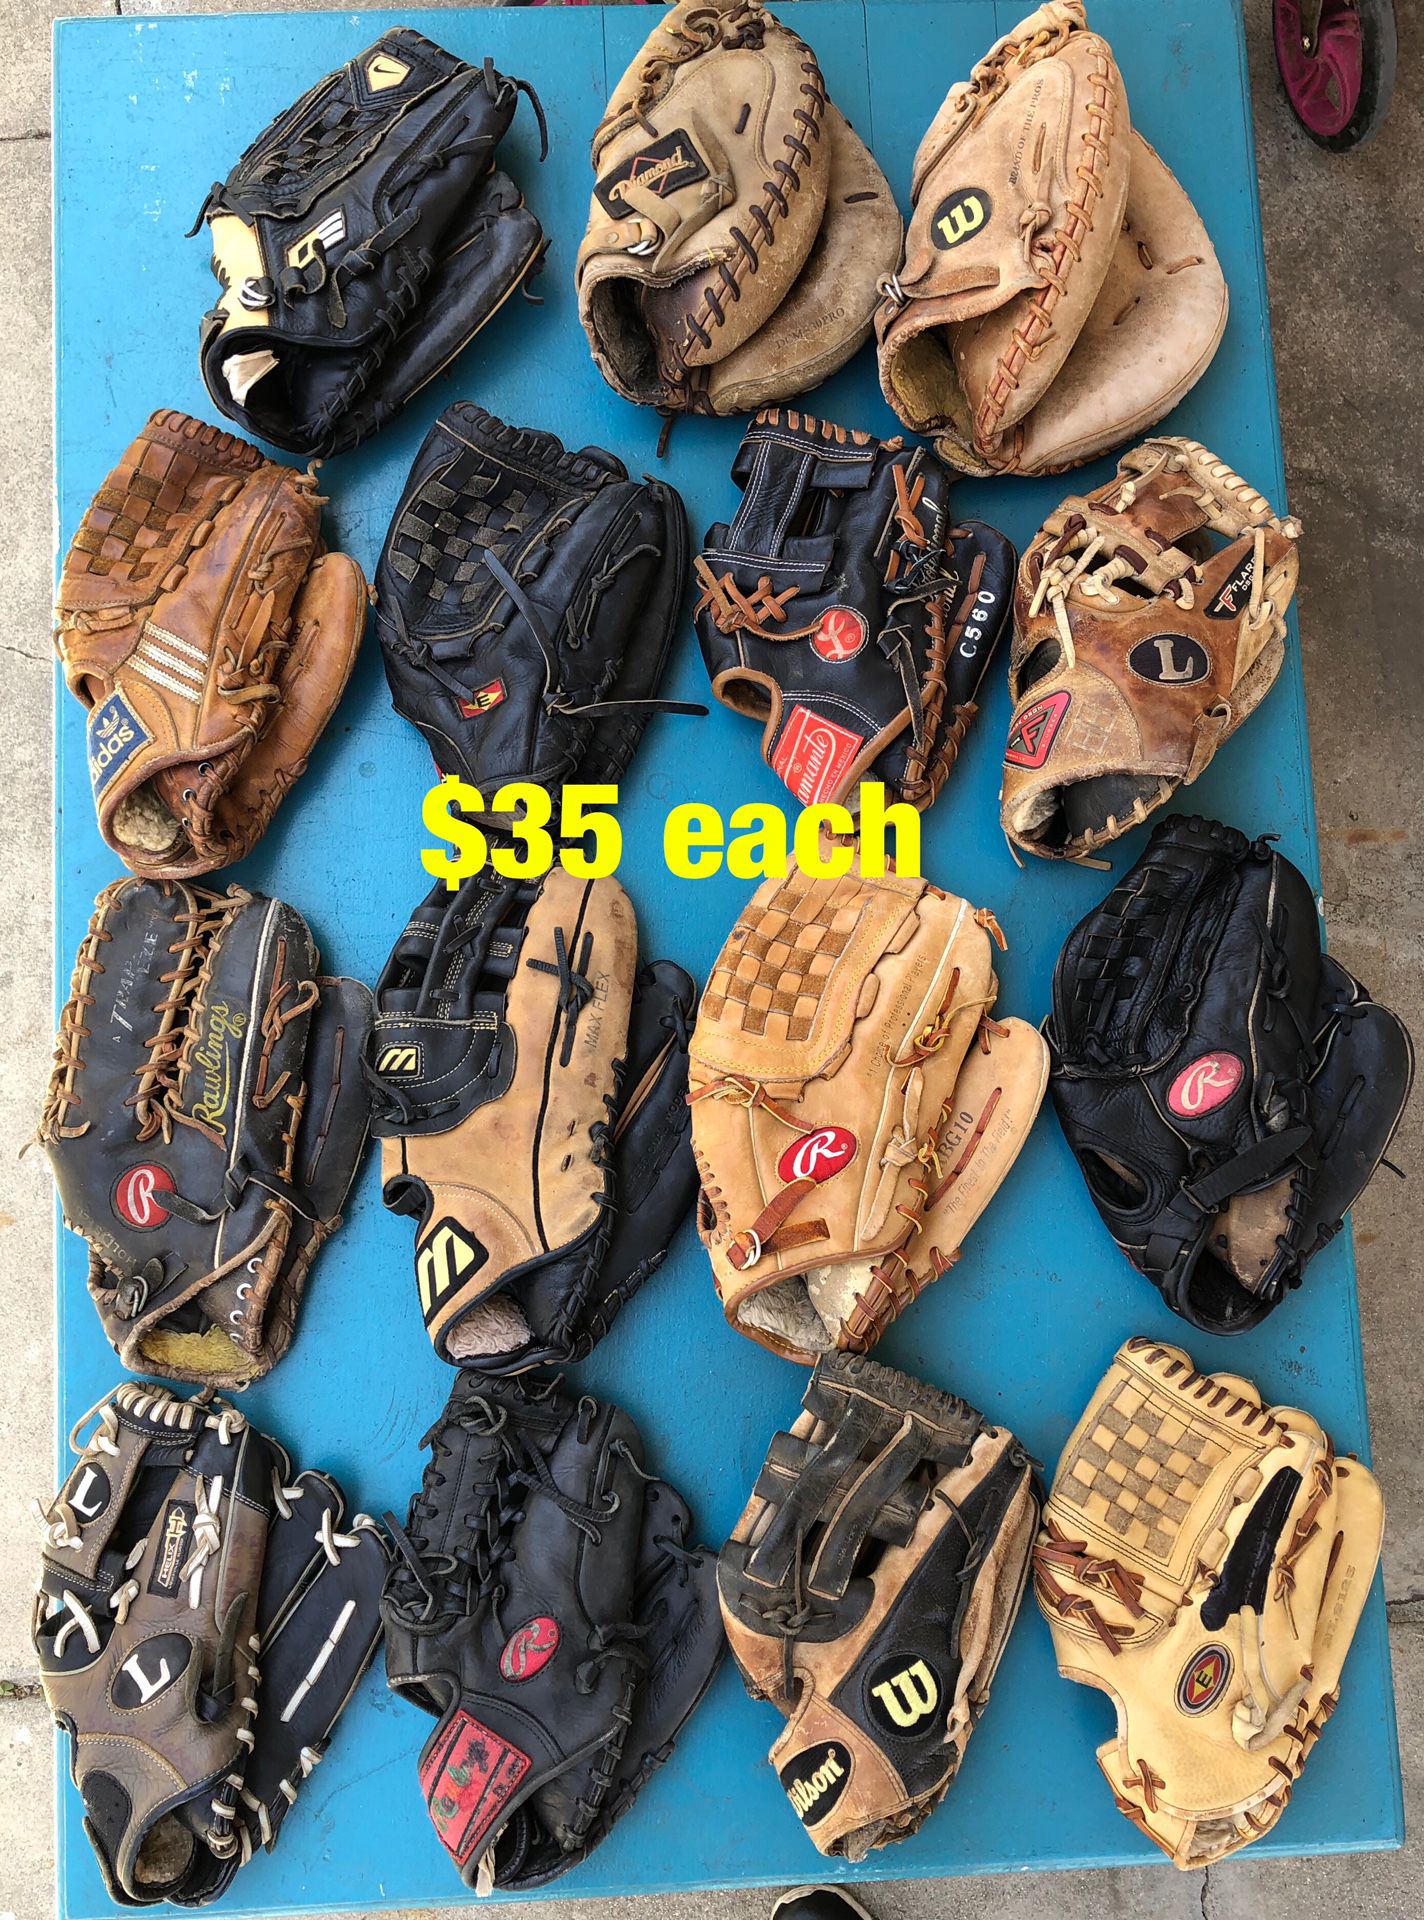 Baseball gloves Wilson easton Rawlings mizuno Nike bats equipment